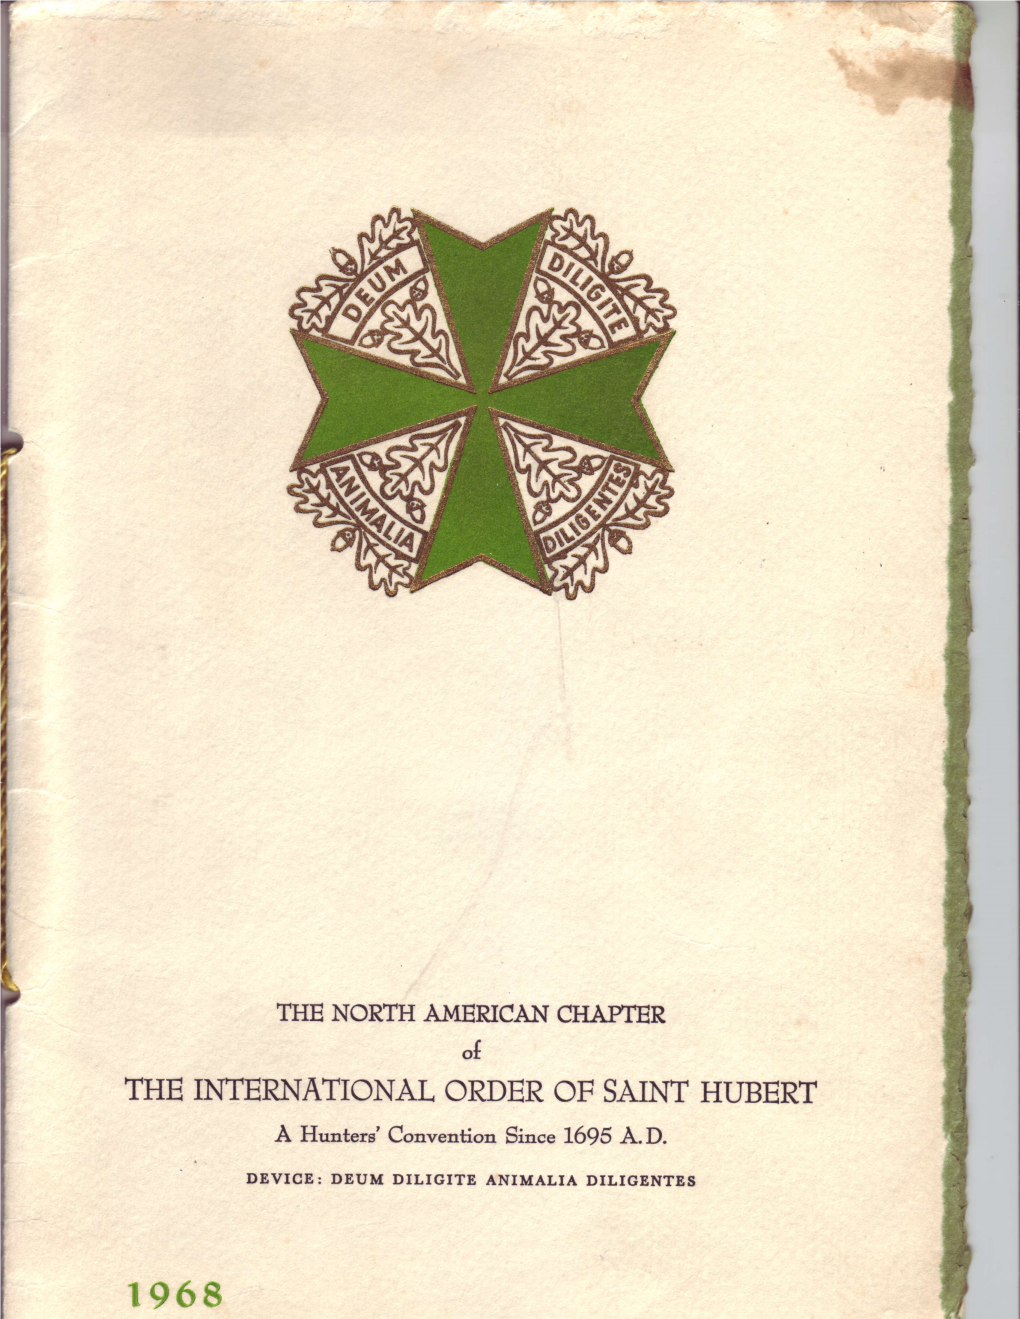 The International Order of Saint Hubert